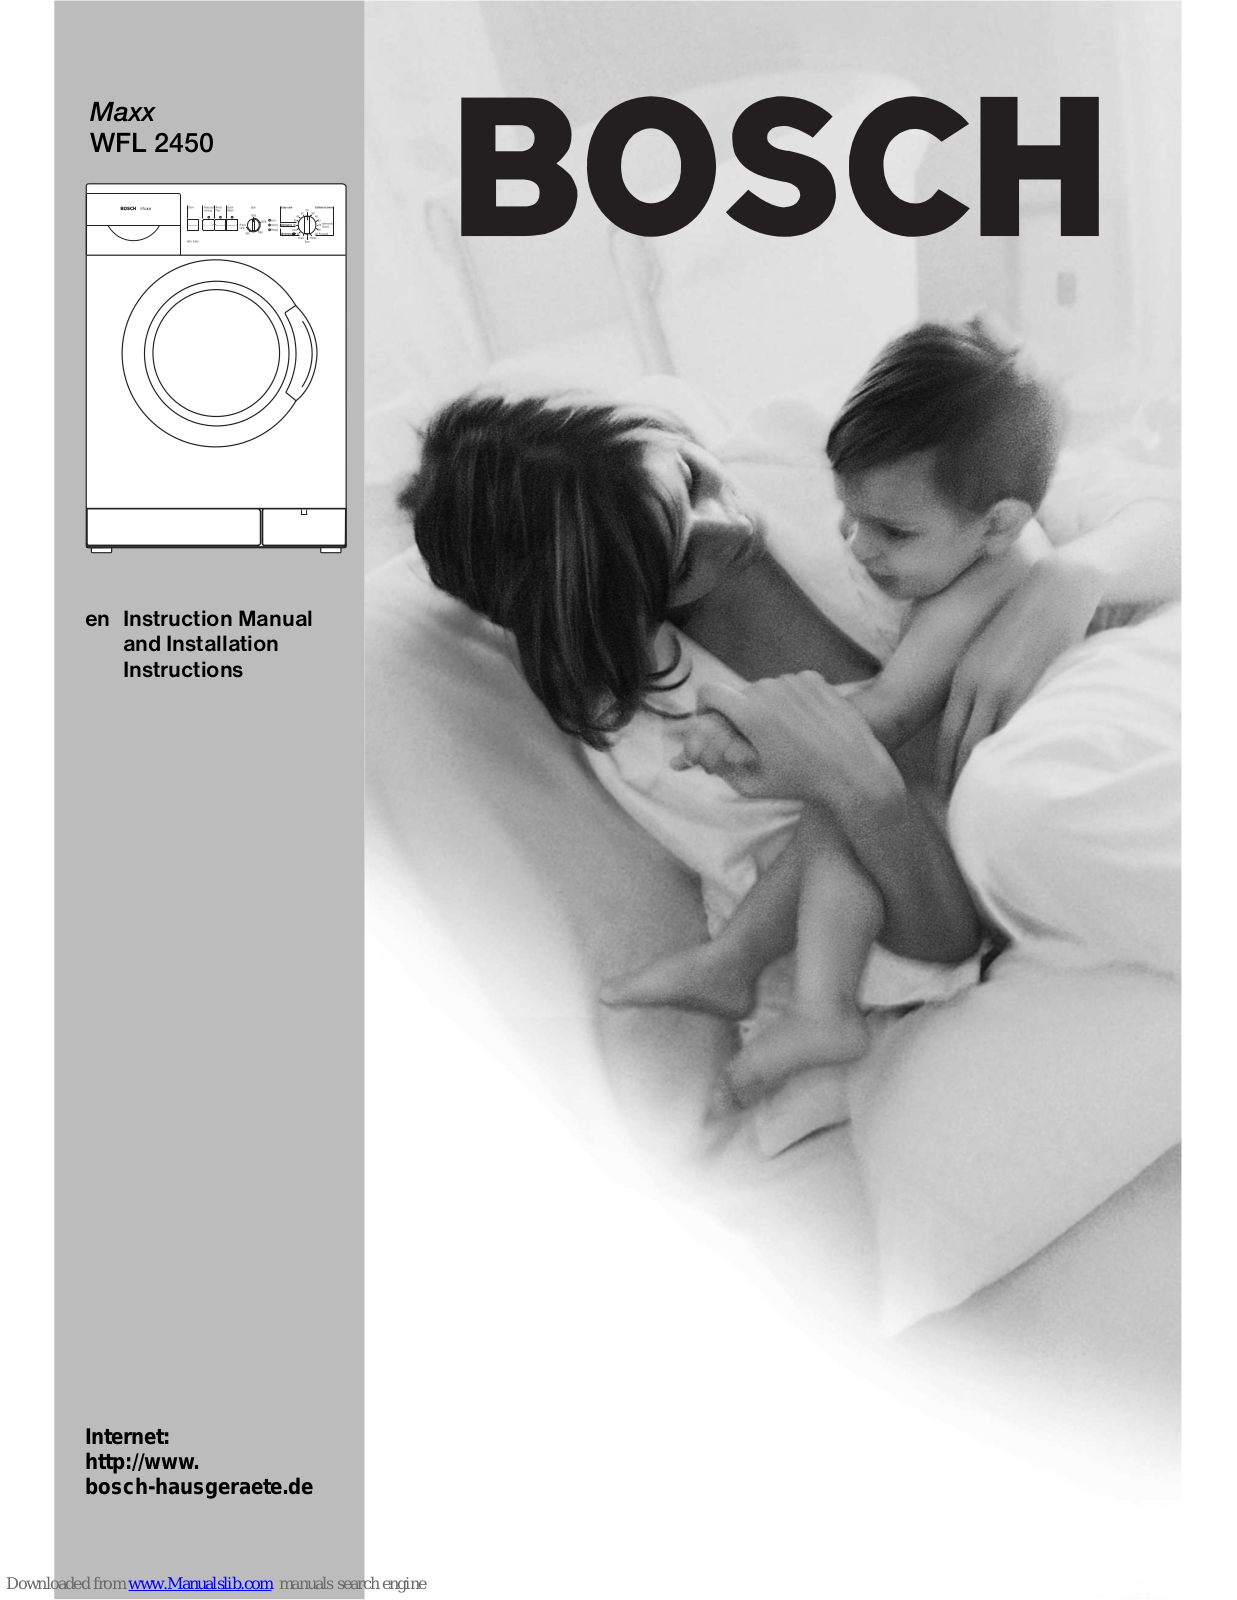 Bosch Maxx WFL 2450, Maxx WFL 2060 Instruction Manual And Installation Instructions